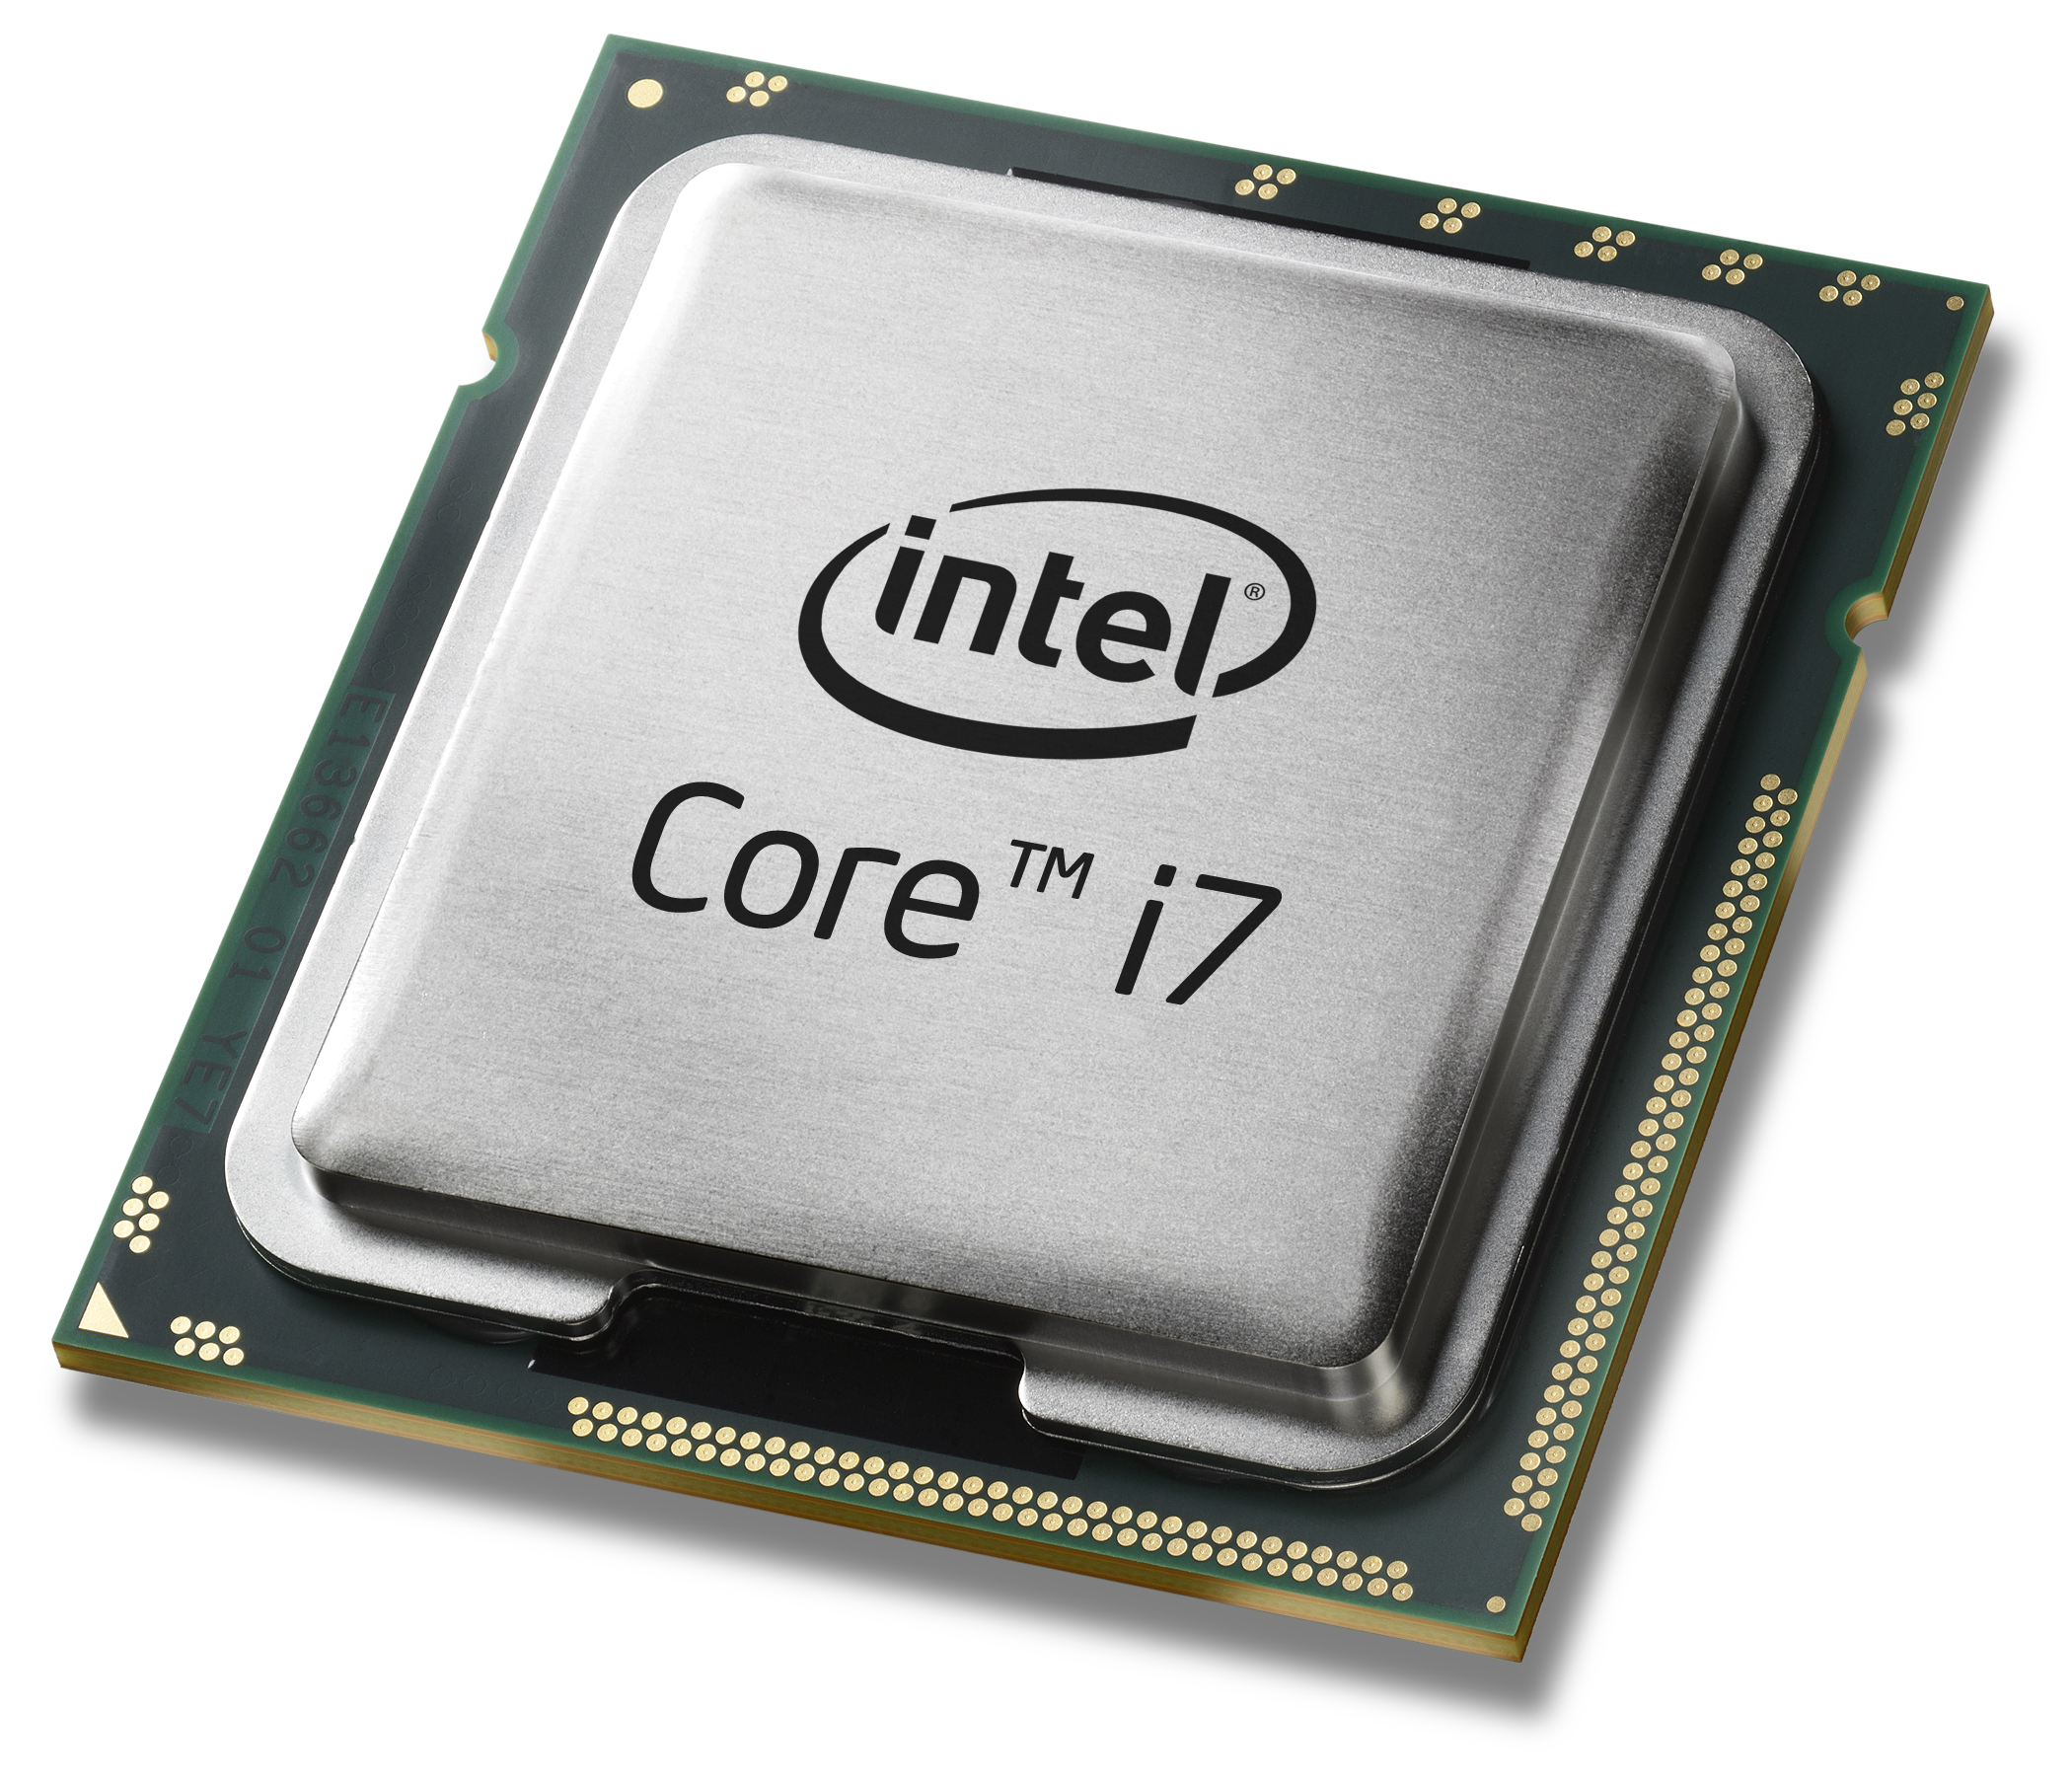 Media asset in full size related to 3dfxzone.it news item entitled as follows: Intel lancia Core i7, il processore per desktop pi veloce al mondo | Image Name: news9033_1.jpg